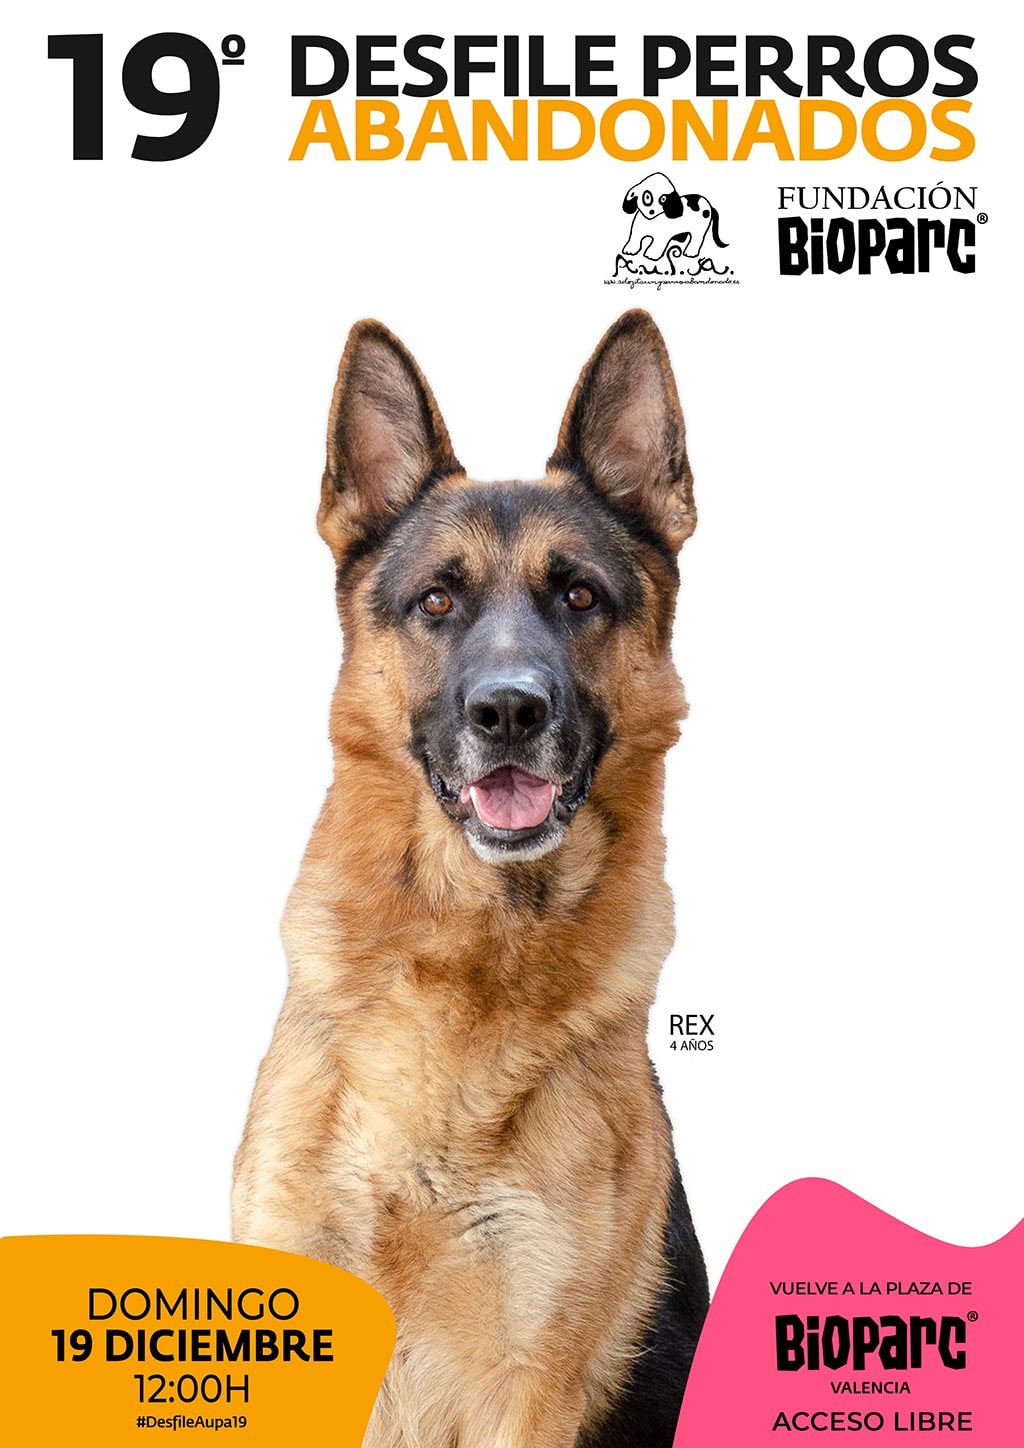 Este domingo 19 vuelve a BIOPARC el 19º Desfile de A.U.P.A para adoptar perros abandonados 